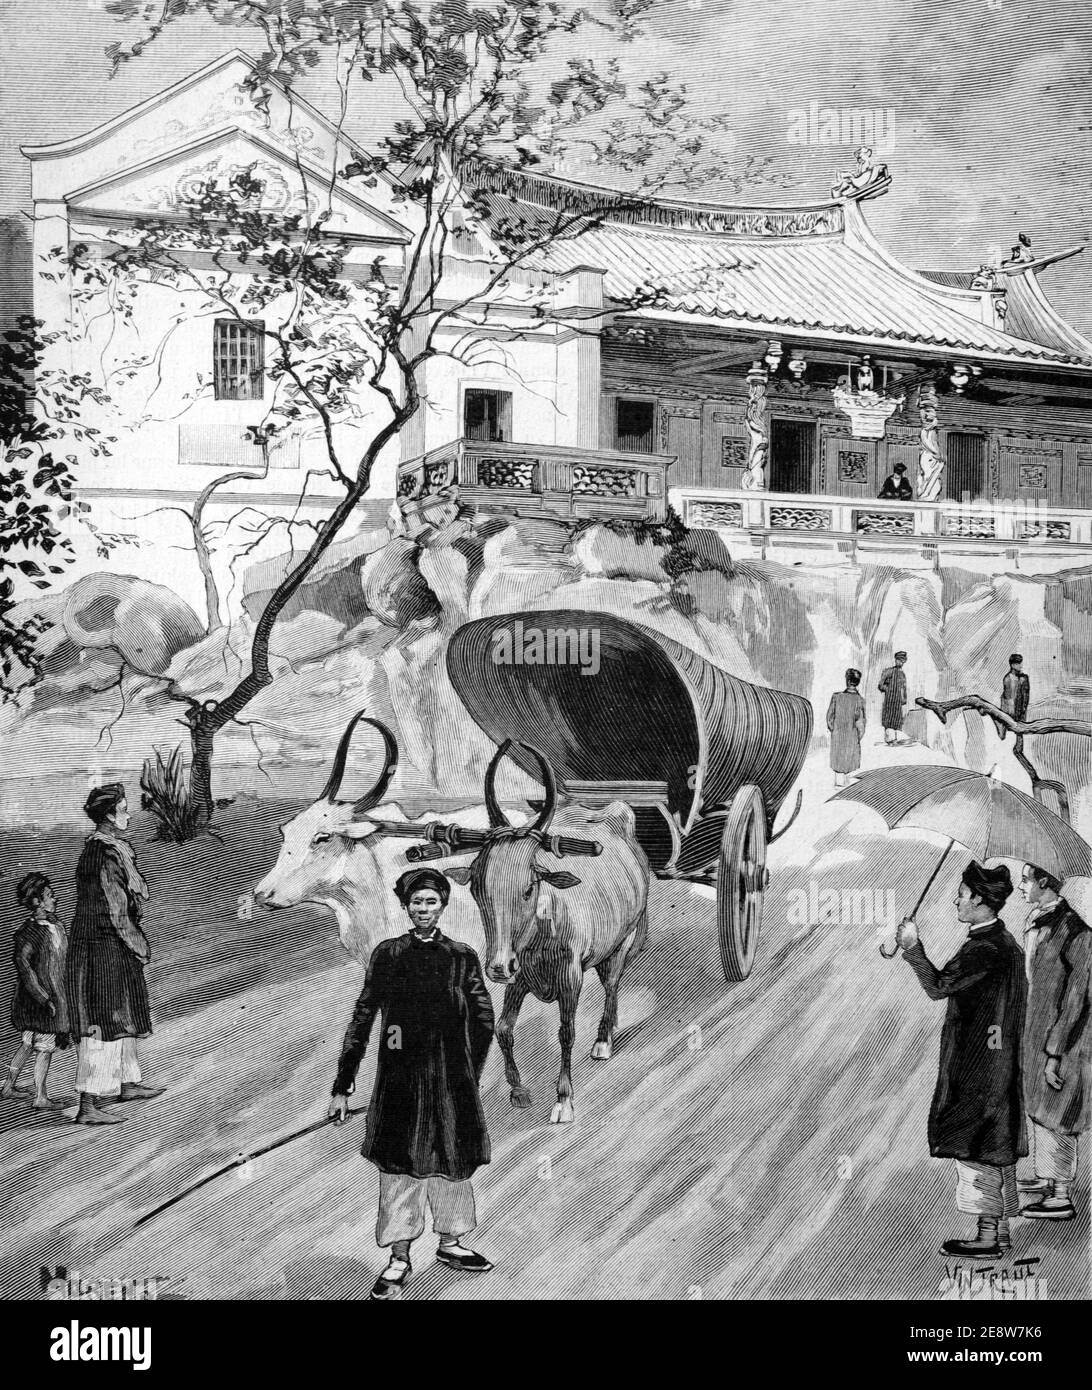 Phuoc Kien Pagoda, Lotus Leaf Pagoda or Buddhist Temple & Ox Cart Ho Chi Minh City Vietnam 1900 Vintage Illustration or Engraving Stock Photo